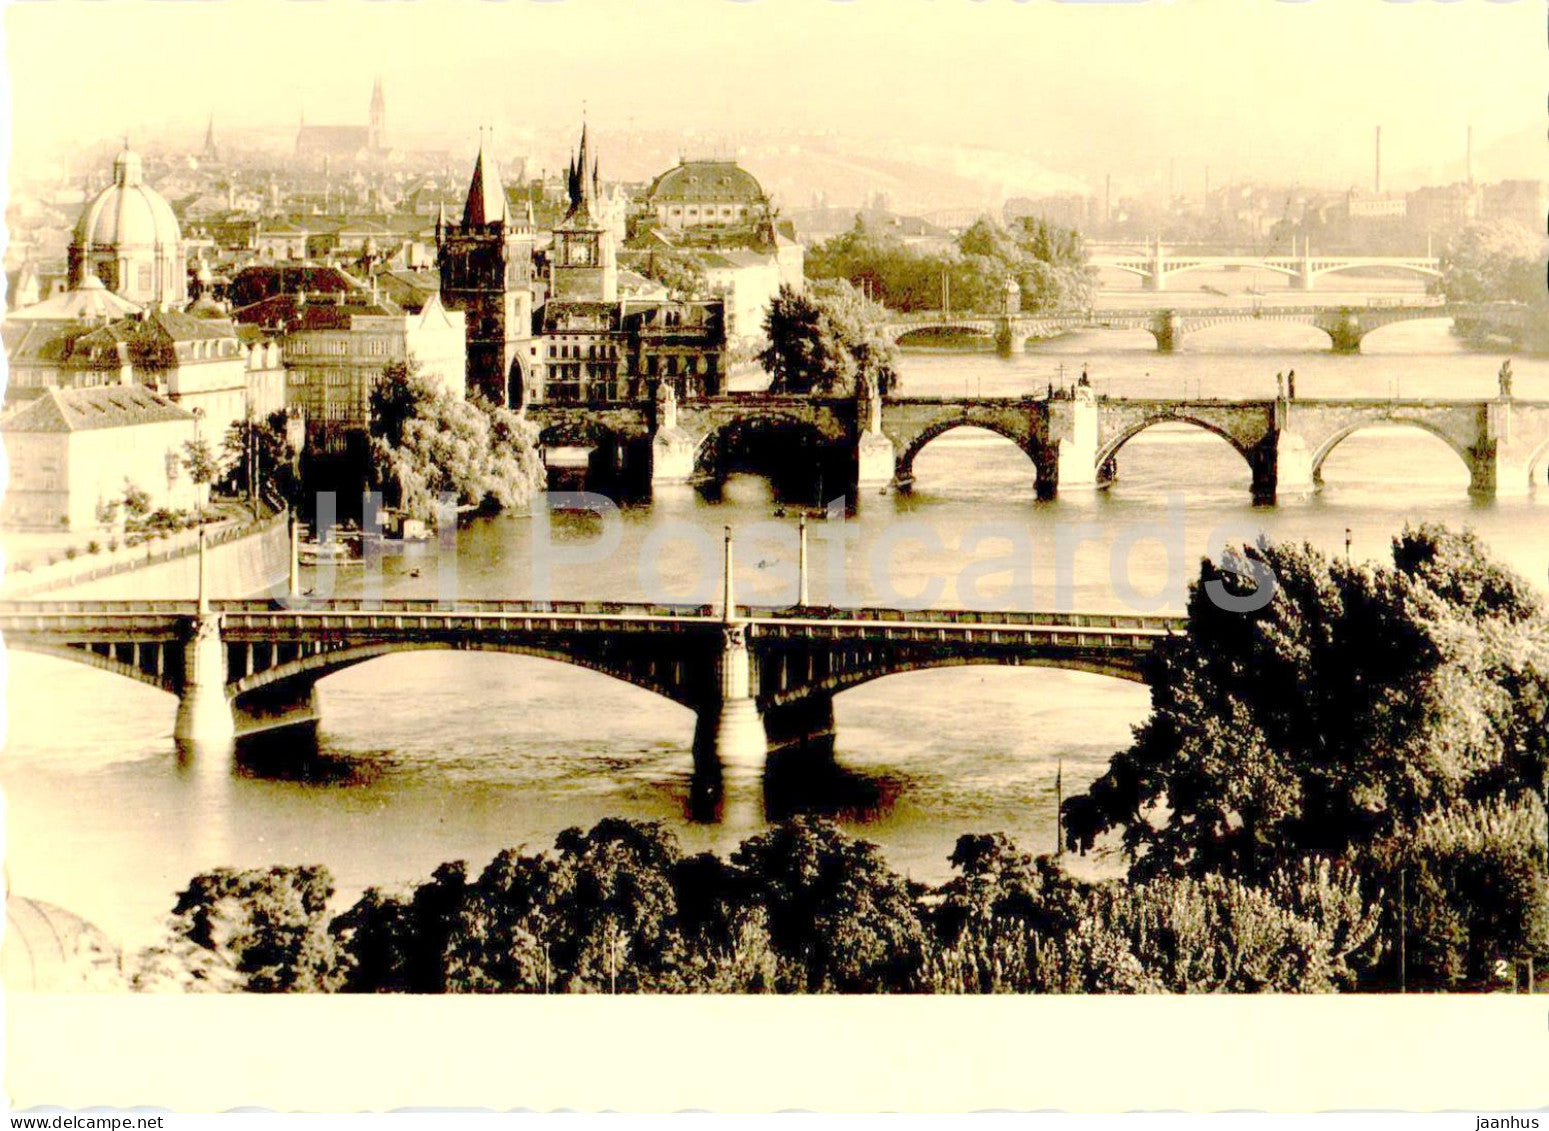 Praha - Prague - Celkovy pohled na mosty - General view of the bridges - Czech Republic - Czechoslovakia - unused - JH Postcards